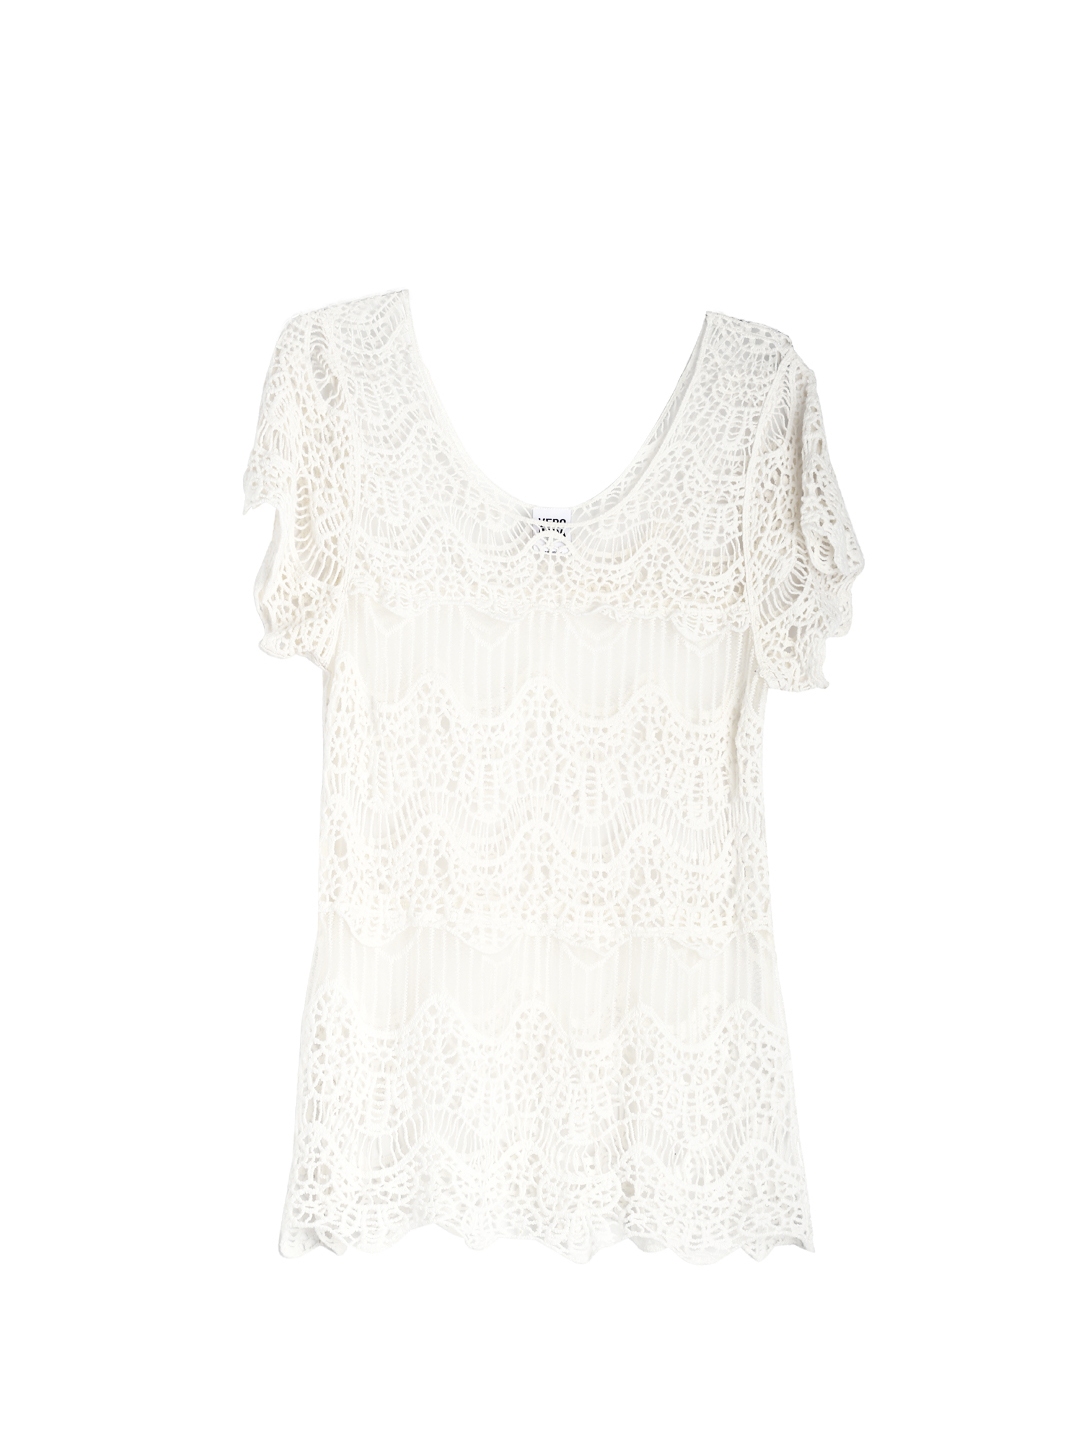 Buy Vero Moda Off White Crochet Top - Tops for Women 834957 | Myntra